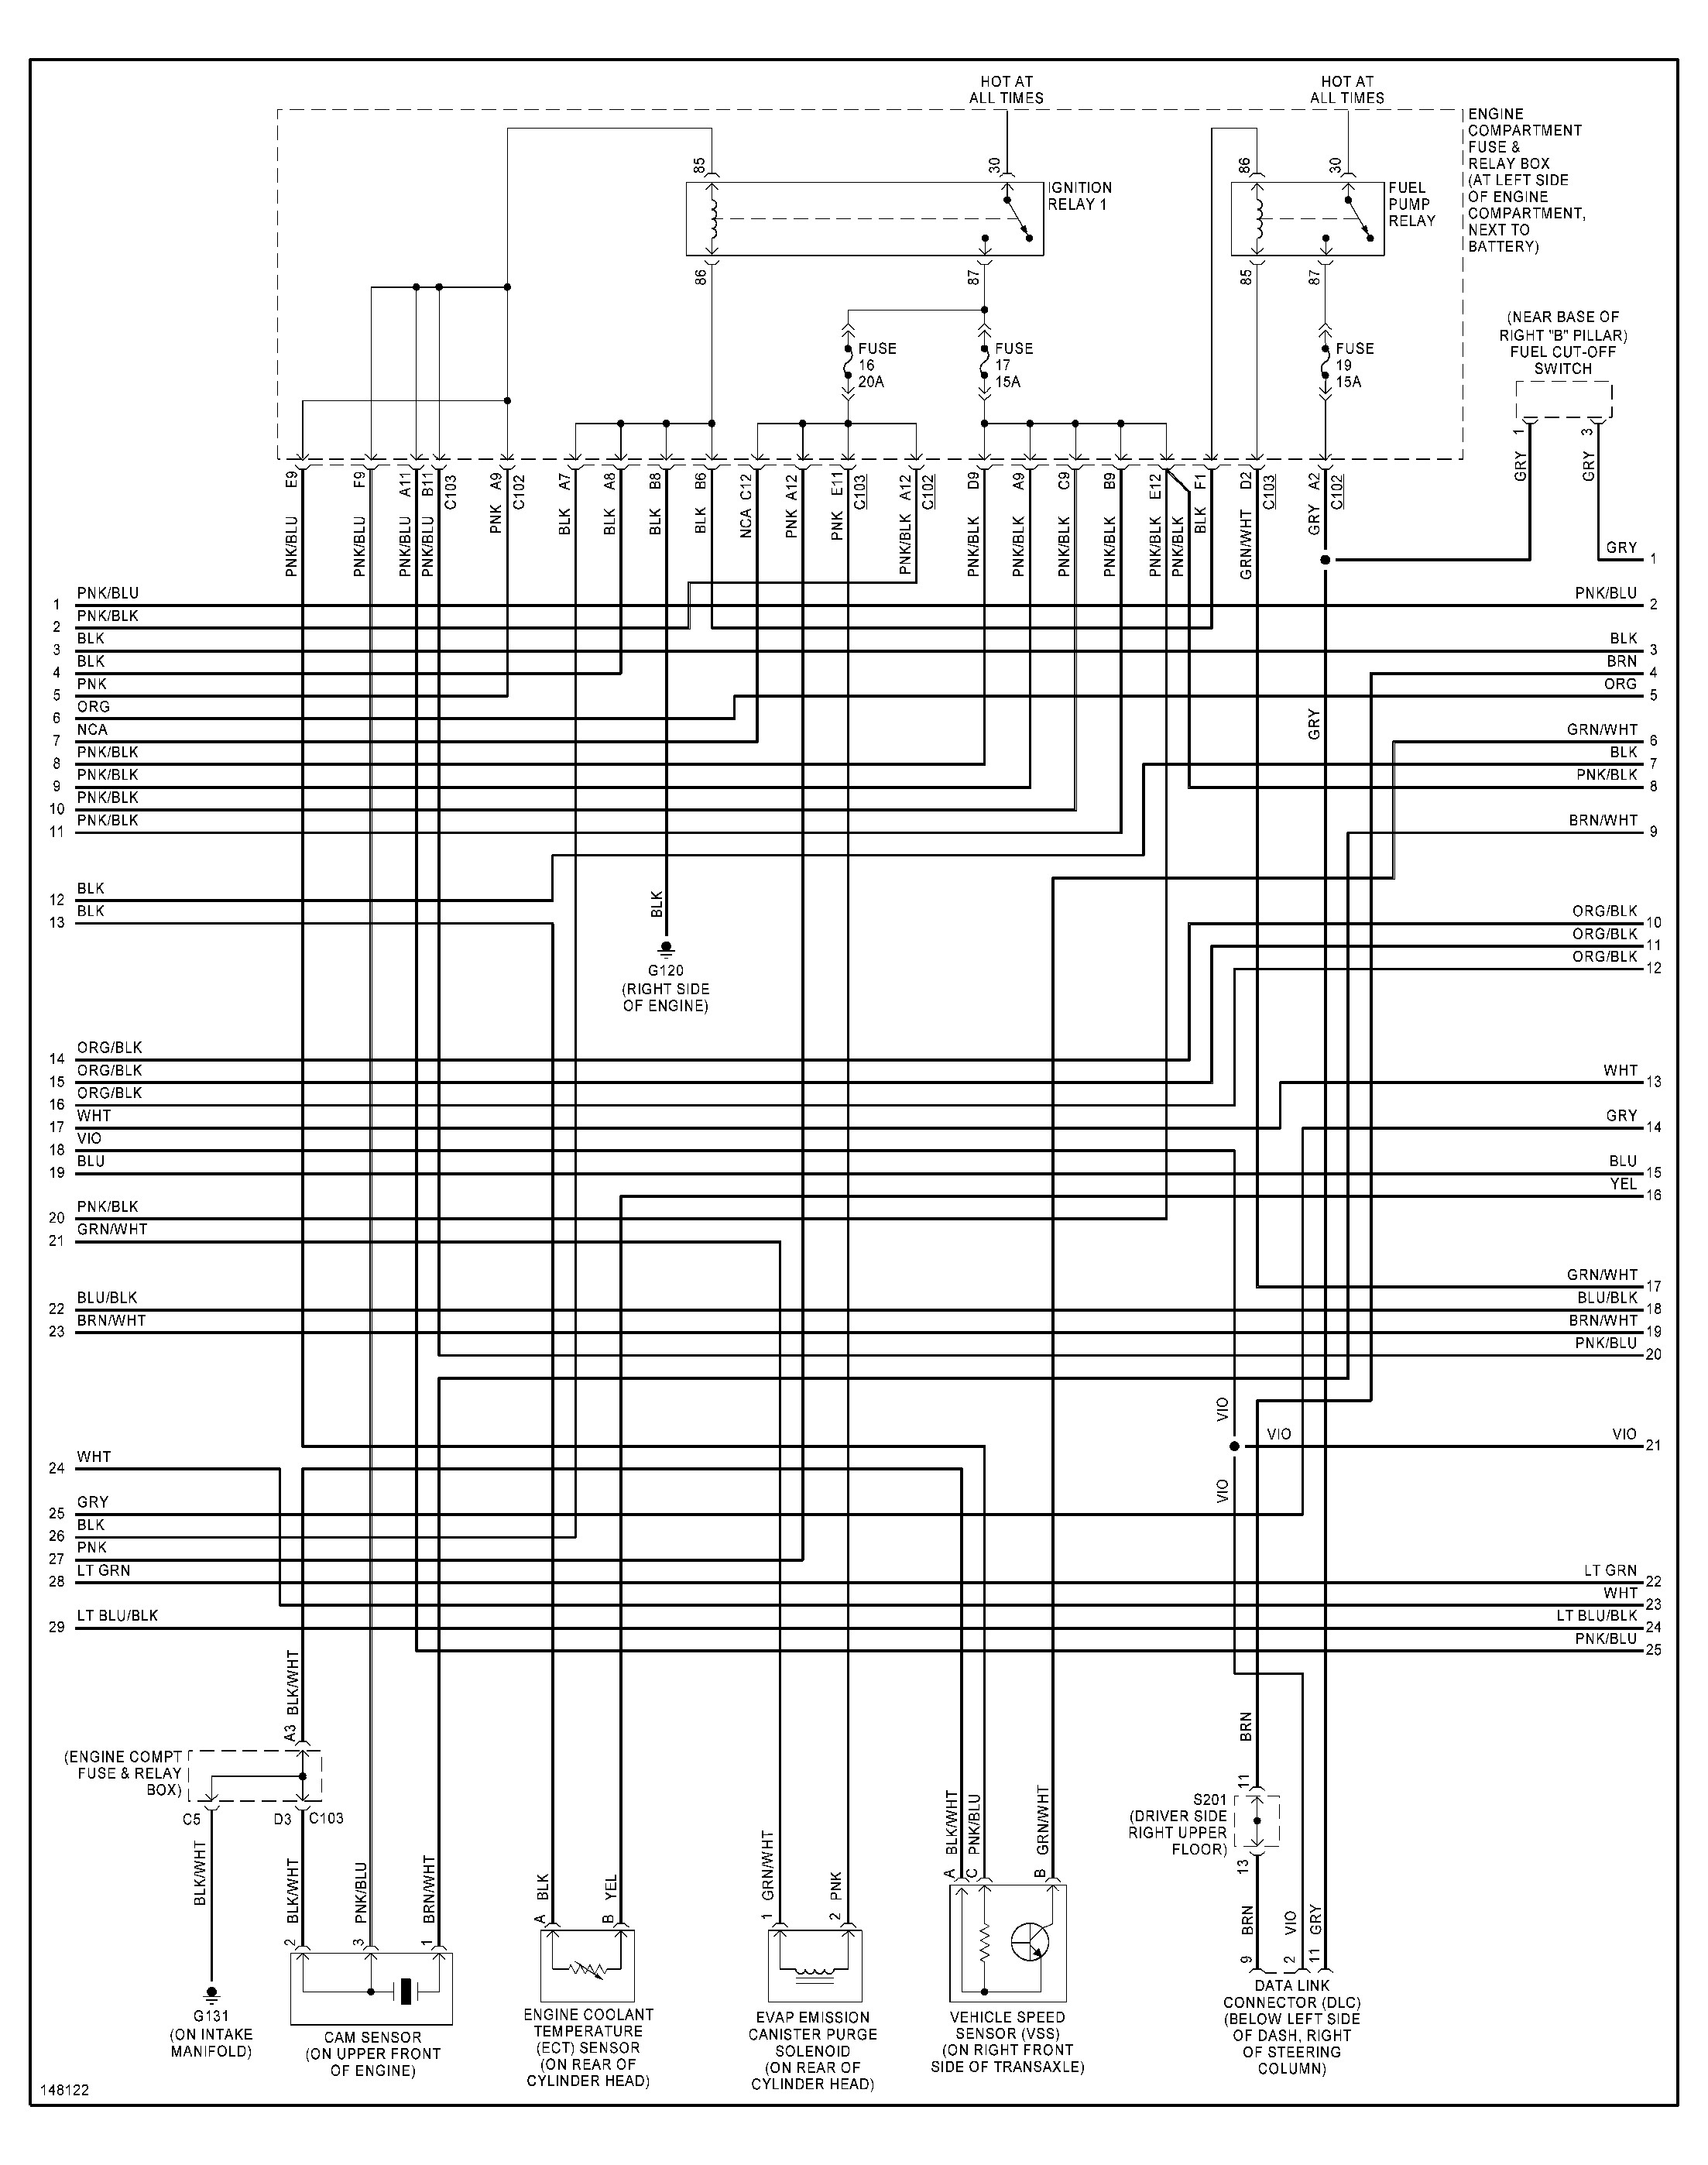 2001 Daewoo Leganza Engine Diagram Hi May I Get the Diagram for A 2000 Daewoo Leganza the Sensors Of 2001 Daewoo Leganza Engine Diagram